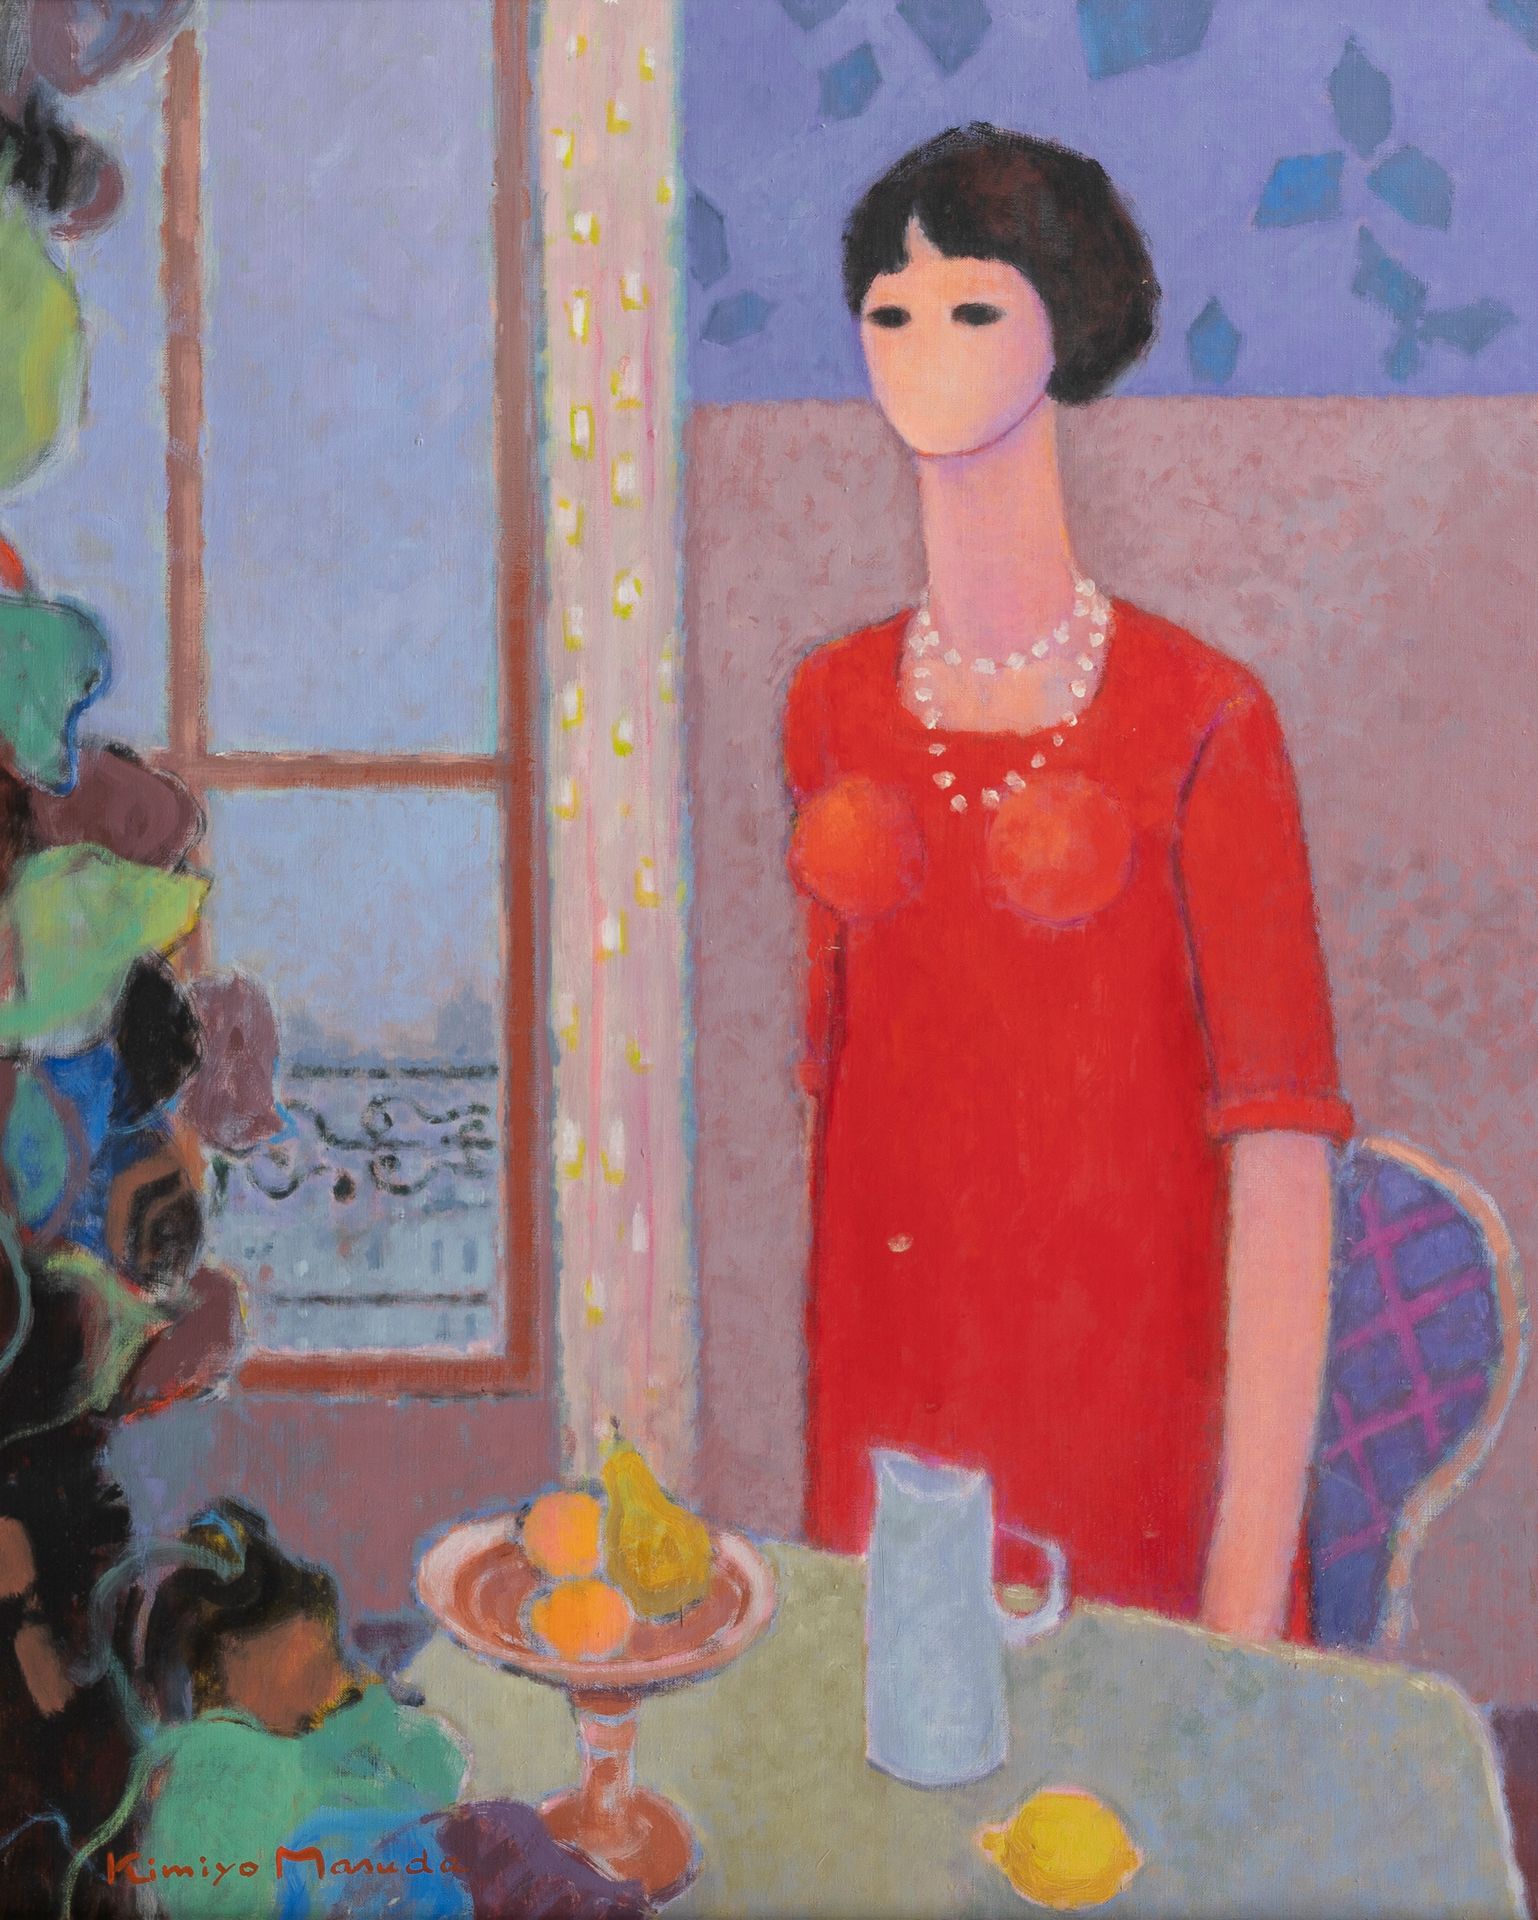 Null MASUDA Kimiyo (生于1943年)

衣服上有红色的女人

布面油画，左下方有签名。

背面有副署和日期89。

73 x 60厘米